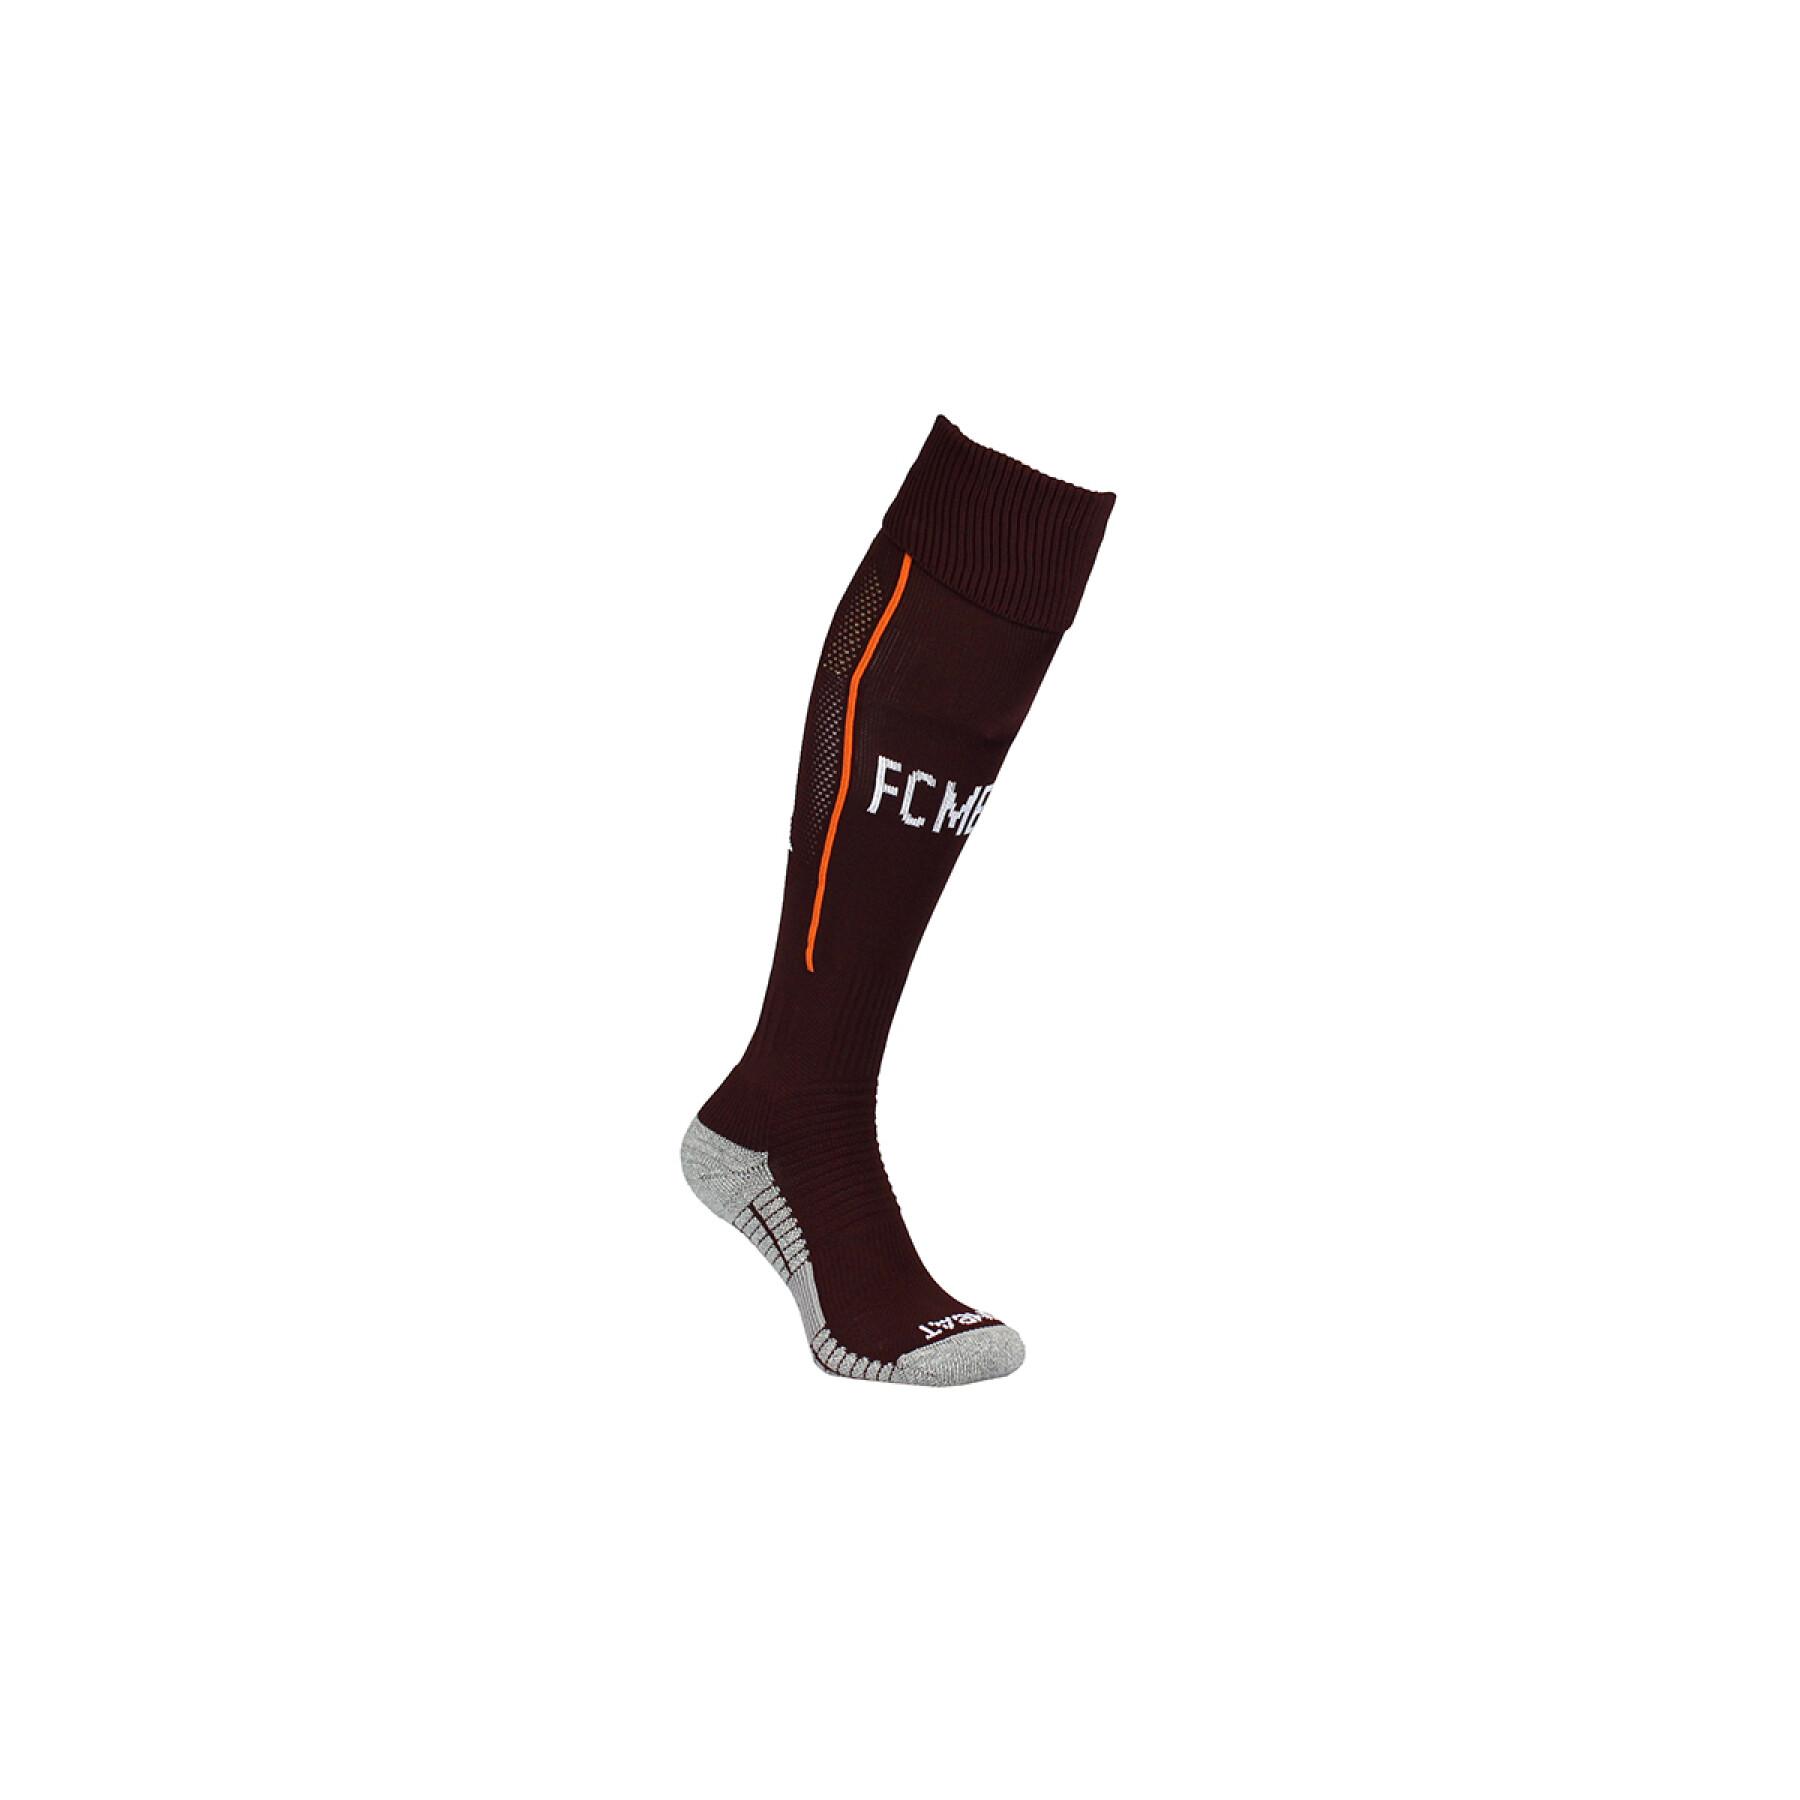 Home socks FC Metz 2021/22 spark pro